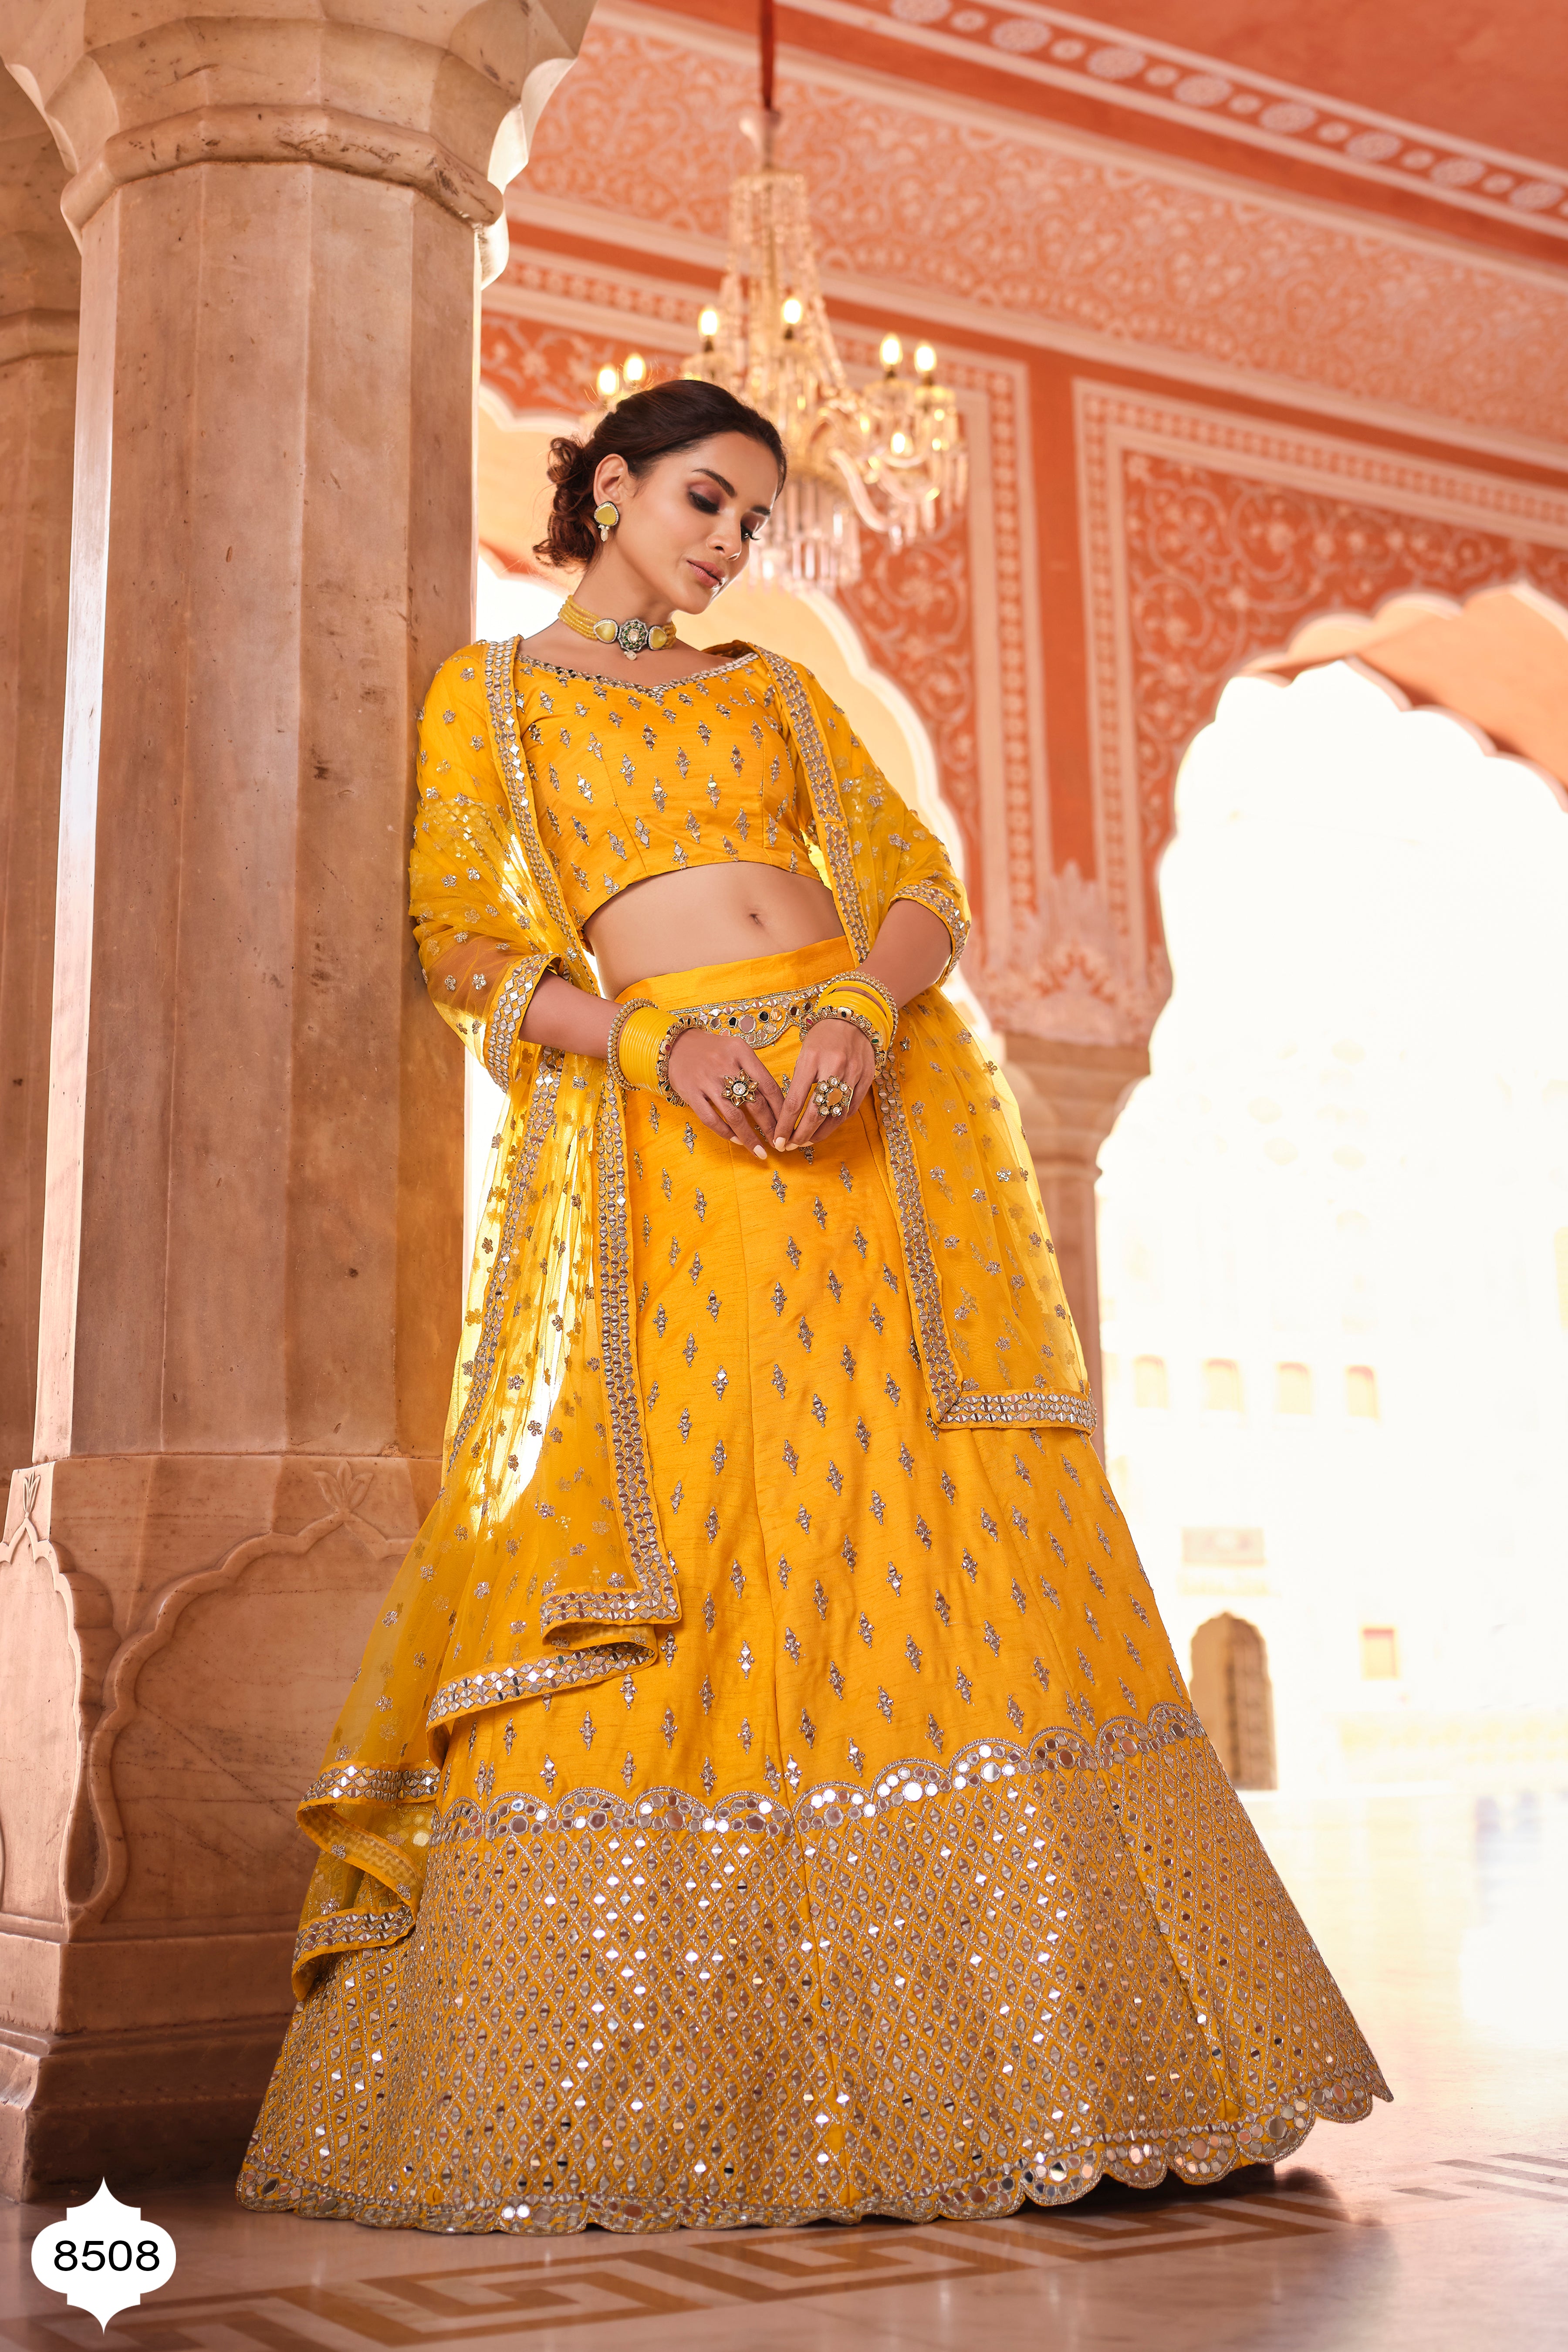 Recreate With A Budget Parineeti Chopra's Bridal Look - ShaadiWish